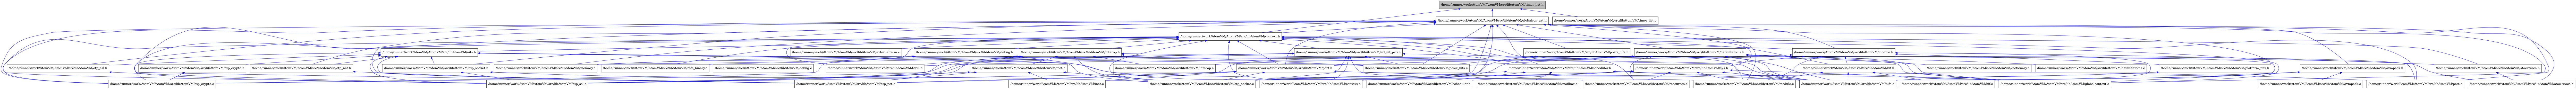 digraph {
    graph [bgcolor="#00000000"]
    node [shape=rectangle style=filled fillcolor="#FFFFFF" font=Helvetica padding=2]
    edge [color="#1414CE"]
    "4" [label="/home/runner/work/AtomVM/AtomVM/src/libAtomVM/bif.c" tooltip="/home/runner/work/AtomVM/AtomVM/src/libAtomVM/bif.c"]
    "46" [label="/home/runner/work/AtomVM/AtomVM/src/libAtomVM/dictionary.c" tooltip="/home/runner/work/AtomVM/AtomVM/src/libAtomVM/dictionary.c"]
    "3" [label="/home/runner/work/AtomVM/AtomVM/src/libAtomVM/bif.h" tooltip="/home/runner/work/AtomVM/AtomVM/src/libAtomVM/bif.h"]
    "28" [label="/home/runner/work/AtomVM/AtomVM/src/libAtomVM/platform_nifs.h" tooltip="/home/runner/work/AtomVM/AtomVM/src/libAtomVM/platform_nifs.h"]
    "16" [label="/home/runner/work/AtomVM/AtomVM/src/libAtomVM/posix_nifs.c" tooltip="/home/runner/work/AtomVM/AtomVM/src/libAtomVM/posix_nifs.c"]
    "47" [label="/home/runner/work/AtomVM/AtomVM/src/libAtomVM/posix_nifs.h" tooltip="/home/runner/work/AtomVM/AtomVM/src/libAtomVM/posix_nifs.h"]
    "45" [label="/home/runner/work/AtomVM/AtomVM/src/libAtomVM/defaultatoms.c" tooltip="/home/runner/work/AtomVM/AtomVM/src/libAtomVM/defaultatoms.c"]
    "44" [label="/home/runner/work/AtomVM/AtomVM/src/libAtomVM/defaultatoms.h" tooltip="/home/runner/work/AtomVM/AtomVM/src/libAtomVM/defaultatoms.h"]
    "22" [label="/home/runner/work/AtomVM/AtomVM/src/libAtomVM/inet.c" tooltip="/home/runner/work/AtomVM/AtomVM/src/libAtomVM/inet.c"]
    "21" [label="/home/runner/work/AtomVM/AtomVM/src/libAtomVM/inet.h" tooltip="/home/runner/work/AtomVM/AtomVM/src/libAtomVM/inet.h"]
    "11" [label="/home/runner/work/AtomVM/AtomVM/src/libAtomVM/scheduler.c" tooltip="/home/runner/work/AtomVM/AtomVM/src/libAtomVM/scheduler.c"]
    "39" [label="/home/runner/work/AtomVM/AtomVM/src/libAtomVM/scheduler.h" tooltip="/home/runner/work/AtomVM/AtomVM/src/libAtomVM/scheduler.h"]
    "7" [label="/home/runner/work/AtomVM/AtomVM/src/libAtomVM/context.c" tooltip="/home/runner/work/AtomVM/AtomVM/src/libAtomVM/context.c"]
    "2" [label="/home/runner/work/AtomVM/AtomVM/src/libAtomVM/context.h" tooltip="/home/runner/work/AtomVM/AtomVM/src/libAtomVM/context.h"]
    "37" [label="/home/runner/work/AtomVM/AtomVM/src/libAtomVM/port.c" tooltip="/home/runner/work/AtomVM/AtomVM/src/libAtomVM/port.c"]
    "38" [label="/home/runner/work/AtomVM/AtomVM/src/libAtomVM/port.h" tooltip="/home/runner/work/AtomVM/AtomVM/src/libAtomVM/port.h"]
    "30" [label="/home/runner/work/AtomVM/AtomVM/src/libAtomVM/stacktrace.c" tooltip="/home/runner/work/AtomVM/AtomVM/src/libAtomVM/stacktrace.c"]
    "29" [label="/home/runner/work/AtomVM/AtomVM/src/libAtomVM/stacktrace.h" tooltip="/home/runner/work/AtomVM/AtomVM/src/libAtomVM/stacktrace.h"]
    "17" [label="/home/runner/work/AtomVM/AtomVM/src/libAtomVM/refc_binary.c" tooltip="/home/runner/work/AtomVM/AtomVM/src/libAtomVM/refc_binary.c"]
    "40" [label="/home/runner/work/AtomVM/AtomVM/src/libAtomVM/mailbox.c" tooltip="/home/runner/work/AtomVM/AtomVM/src/libAtomVM/mailbox.c"]
    "5" [label="/home/runner/work/AtomVM/AtomVM/src/libAtomVM/module.c" tooltip="/home/runner/work/AtomVM/AtomVM/src/libAtomVM/module.c"]
    "27" [label="/home/runner/work/AtomVM/AtomVM/src/libAtomVM/module.h" tooltip="/home/runner/work/AtomVM/AtomVM/src/libAtomVM/module.h"]
    "43" [label="/home/runner/work/AtomVM/AtomVM/src/libAtomVM/avmpack.c" tooltip="/home/runner/work/AtomVM/AtomVM/src/libAtomVM/avmpack.c"]
    "42" [label="/home/runner/work/AtomVM/AtomVM/src/libAtomVM/avmpack.h" tooltip="/home/runner/work/AtomVM/AtomVM/src/libAtomVM/avmpack.h"]
    "26" [label="/home/runner/work/AtomVM/AtomVM/src/libAtomVM/term.c" tooltip="/home/runner/work/AtomVM/AtomVM/src/libAtomVM/term.c"]
    "24" [label="/home/runner/work/AtomVM/AtomVM/src/libAtomVM/interop.c" tooltip="/home/runner/work/AtomVM/AtomVM/src/libAtomVM/interop.c"]
    "15" [label="/home/runner/work/AtomVM/AtomVM/src/libAtomVM/otp_ssl.c" tooltip="/home/runner/work/AtomVM/AtomVM/src/libAtomVM/otp_ssl.c"]
    "20" [label="/home/runner/work/AtomVM/AtomVM/src/libAtomVM/interop.h" tooltip="/home/runner/work/AtomVM/AtomVM/src/libAtomVM/interop.h"]
    "36" [label="/home/runner/work/AtomVM/AtomVM/src/libAtomVM/otp_ssl.h" tooltip="/home/runner/work/AtomVM/AtomVM/src/libAtomVM/otp_ssl.h"]
    "18" [label="/home/runner/work/AtomVM/AtomVM/src/libAtomVM/resources.c" tooltip="/home/runner/work/AtomVM/AtomVM/src/libAtomVM/resources.c"]
    "25" [label="/home/runner/work/AtomVM/AtomVM/src/libAtomVM/otp_crypto.c" tooltip="/home/runner/work/AtomVM/AtomVM/src/libAtomVM/otp_crypto.c"]
    "33" [label="/home/runner/work/AtomVM/AtomVM/src/libAtomVM/otp_crypto.h" tooltip="/home/runner/work/AtomVM/AtomVM/src/libAtomVM/otp_crypto.h"]
    "23" [label="/home/runner/work/AtomVM/AtomVM/src/libAtomVM/otp_net.c" tooltip="/home/runner/work/AtomVM/AtomVM/src/libAtomVM/otp_net.c"]
    "34" [label="/home/runner/work/AtomVM/AtomVM/src/libAtomVM/otp_net.h" tooltip="/home/runner/work/AtomVM/AtomVM/src/libAtomVM/otp_net.h"]
    "12" [label="/home/runner/work/AtomVM/AtomVM/src/libAtomVM/erl_nif_priv.h" tooltip="/home/runner/work/AtomVM/AtomVM/src/libAtomVM/erl_nif_priv.h"]
    "31" [label="/home/runner/work/AtomVM/AtomVM/src/libAtomVM/sys.h" tooltip="/home/runner/work/AtomVM/AtomVM/src/libAtomVM/sys.h"]
    "6" [label="/home/runner/work/AtomVM/AtomVM/src/libAtomVM/nifs.c" tooltip="/home/runner/work/AtomVM/AtomVM/src/libAtomVM/nifs.c"]
    "32" [label="/home/runner/work/AtomVM/AtomVM/src/libAtomVM/nifs.h" tooltip="/home/runner/work/AtomVM/AtomVM/src/libAtomVM/nifs.h"]
    "9" [label="/home/runner/work/AtomVM/AtomVM/src/libAtomVM/debug.c" tooltip="/home/runner/work/AtomVM/AtomVM/src/libAtomVM/debug.c"]
    "8" [label="/home/runner/work/AtomVM/AtomVM/src/libAtomVM/debug.h" tooltip="/home/runner/work/AtomVM/AtomVM/src/libAtomVM/debug.h"]
    "13" [label="/home/runner/work/AtomVM/AtomVM/src/libAtomVM/globalcontext.c" tooltip="/home/runner/work/AtomVM/AtomVM/src/libAtomVM/globalcontext.c"]
    "41" [label="/home/runner/work/AtomVM/AtomVM/src/libAtomVM/globalcontext.h" tooltip="/home/runner/work/AtomVM/AtomVM/src/libAtomVM/globalcontext.h"]
    "10" [label="/home/runner/work/AtomVM/AtomVM/src/libAtomVM/memory.c" tooltip="/home/runner/work/AtomVM/AtomVM/src/libAtomVM/memory.c"]
    "14" [label="/home/runner/work/AtomVM/AtomVM/src/libAtomVM/otp_socket.c" tooltip="/home/runner/work/AtomVM/AtomVM/src/libAtomVM/otp_socket.c"]
    "35" [label="/home/runner/work/AtomVM/AtomVM/src/libAtomVM/otp_socket.h" tooltip="/home/runner/work/AtomVM/AtomVM/src/libAtomVM/otp_socket.h"]
    "48" [label="/home/runner/work/AtomVM/AtomVM/src/libAtomVM/timer_list.c" tooltip="/home/runner/work/AtomVM/AtomVM/src/libAtomVM/timer_list.c"]
    "1" [label="/home/runner/work/AtomVM/AtomVM/src/libAtomVM/timer_list.h" tooltip="/home/runner/work/AtomVM/AtomVM/src/libAtomVM/timer_list.h" fillcolor="#BFBFBF"]
    "19" [label="/home/runner/work/AtomVM/AtomVM/src/libAtomVM/externalterm.c" tooltip="/home/runner/work/AtomVM/AtomVM/src/libAtomVM/externalterm.c"]
    "3" -> "4" [dir=back tooltip="include"]
    "3" -> "5" [dir=back tooltip="include"]
    "3" -> "6" [dir=back tooltip="include"]
    "28" -> "6" [dir=back tooltip="include"]
    "47" -> "13" [dir=back tooltip="include"]
    "47" -> "6" [dir=back tooltip="include"]
    "47" -> "14" [dir=back tooltip="include"]
    "47" -> "16" [dir=back tooltip="include"]
    "44" -> "4" [dir=back tooltip="include"]
    "44" -> "45" [dir=back tooltip="include"]
    "44" -> "46" [dir=back tooltip="include"]
    "44" -> "13" [dir=back tooltip="include"]
    "44" -> "24" [dir=back tooltip="include"]
    "44" -> "6" [dir=back tooltip="include"]
    "44" -> "25" [dir=back tooltip="include"]
    "44" -> "23" [dir=back tooltip="include"]
    "44" -> "14" [dir=back tooltip="include"]
    "44" -> "15" [dir=back tooltip="include"]
    "44" -> "37" [dir=back tooltip="include"]
    "44" -> "38" [dir=back tooltip="include"]
    "44" -> "16" [dir=back tooltip="include"]
    "44" -> "18" [dir=back tooltip="include"]
    "44" -> "30" [dir=back tooltip="include"]
    "21" -> "22" [dir=back tooltip="include"]
    "21" -> "23" [dir=back tooltip="include"]
    "21" -> "14" [dir=back tooltip="include"]
    "21" -> "15" [dir=back tooltip="include"]
    "39" -> "13" [dir=back tooltip="include"]
    "39" -> "40" [dir=back tooltip="include"]
    "39" -> "6" [dir=back tooltip="include"]
    "39" -> "14" [dir=back tooltip="include"]
    "39" -> "11" [dir=back tooltip="include"]
    "2" -> "3" [dir=back tooltip="include"]
    "2" -> "7" [dir=back tooltip="include"]
    "2" -> "8" [dir=back tooltip="include"]
    "2" -> "12" [dir=back tooltip="include"]
    "2" -> "19" [dir=back tooltip="include"]
    "2" -> "13" [dir=back tooltip="include"]
    "2" -> "20" [dir=back tooltip="include"]
    "2" -> "10" [dir=back tooltip="include"]
    "2" -> "5" [dir=back tooltip="include"]
    "2" -> "27" [dir=back tooltip="include"]
    "2" -> "6" [dir=back tooltip="include"]
    "2" -> "32" [dir=back tooltip="include"]
    "2" -> "25" [dir=back tooltip="include"]
    "2" -> "23" [dir=back tooltip="include"]
    "2" -> "14" [dir=back tooltip="include"]
    "2" -> "15" [dir=back tooltip="include"]
    "2" -> "37" [dir=back tooltip="include"]
    "2" -> "38" [dir=back tooltip="include"]
    "2" -> "17" [dir=back tooltip="include"]
    "2" -> "18" [dir=back tooltip="include"]
    "2" -> "39" [dir=back tooltip="include"]
    "2" -> "29" [dir=back tooltip="include"]
    "2" -> "26" [dir=back tooltip="include"]
    "38" -> "22" [dir=back tooltip="include"]
    "38" -> "6" [dir=back tooltip="include"]
    "38" -> "23" [dir=back tooltip="include"]
    "38" -> "14" [dir=back tooltip="include"]
    "38" -> "15" [dir=back tooltip="include"]
    "38" -> "37" [dir=back tooltip="include"]
    "29" -> "30" [dir=back tooltip="include"]
    "27" -> "3" [dir=back tooltip="include"]
    "27" -> "5" [dir=back tooltip="include"]
    "27" -> "6" [dir=back tooltip="include"]
    "27" -> "28" [dir=back tooltip="include"]
    "27" -> "29" [dir=back tooltip="include"]
    "27" -> "31" [dir=back tooltip="include"]
    "27" -> "26" [dir=back tooltip="include"]
    "42" -> "43" [dir=back tooltip="include"]
    "42" -> "13" [dir=back tooltip="include"]
    "42" -> "6" [dir=back tooltip="include"]
    "20" -> "21" [dir=back tooltip="include"]
    "20" -> "24" [dir=back tooltip="include"]
    "20" -> "6" [dir=back tooltip="include"]
    "20" -> "25" [dir=back tooltip="include"]
    "20" -> "23" [dir=back tooltip="include"]
    "20" -> "14" [dir=back tooltip="include"]
    "20" -> "15" [dir=back tooltip="include"]
    "20" -> "16" [dir=back tooltip="include"]
    "20" -> "26" [dir=back tooltip="include"]
    "36" -> "15" [dir=back tooltip="include"]
    "33" -> "25" [dir=back tooltip="include"]
    "34" -> "23" [dir=back tooltip="include"]
    "12" -> "7" [dir=back tooltip="include"]
    "12" -> "13" [dir=back tooltip="include"]
    "12" -> "10" [dir=back tooltip="include"]
    "12" -> "14" [dir=back tooltip="include"]
    "12" -> "15" [dir=back tooltip="include"]
    "12" -> "16" [dir=back tooltip="include"]
    "12" -> "17" [dir=back tooltip="include"]
    "12" -> "18" [dir=back tooltip="include"]
    "31" -> "7" [dir=back tooltip="include"]
    "31" -> "13" [dir=back tooltip="include"]
    "31" -> "5" [dir=back tooltip="include"]
    "31" -> "6" [dir=back tooltip="include"]
    "31" -> "14" [dir=back tooltip="include"]
    "31" -> "18" [dir=back tooltip="include"]
    "31" -> "11" [dir=back tooltip="include"]
    "32" -> "5" [dir=back tooltip="include"]
    "32" -> "6" [dir=back tooltip="include"]
    "32" -> "25" [dir=back tooltip="include"]
    "32" -> "33" [dir=back tooltip="include"]
    "32" -> "23" [dir=back tooltip="include"]
    "32" -> "34" [dir=back tooltip="include"]
    "32" -> "14" [dir=back tooltip="include"]
    "32" -> "35" [dir=back tooltip="include"]
    "32" -> "15" [dir=back tooltip="include"]
    "32" -> "36" [dir=back tooltip="include"]
    "32" -> "16" [dir=back tooltip="include"]
    "8" -> "9" [dir=back tooltip="include"]
    "8" -> "10" [dir=back tooltip="include"]
    "8" -> "11" [dir=back tooltip="include"]
    "41" -> "42" [dir=back tooltip="include"]
    "41" -> "7" [dir=back tooltip="include"]
    "41" -> "2" [dir=back tooltip="include"]
    "41" -> "44" [dir=back tooltip="include"]
    "41" -> "13" [dir=back tooltip="include"]
    "41" -> "10" [dir=back tooltip="include"]
    "41" -> "5" [dir=back tooltip="include"]
    "41" -> "27" [dir=back tooltip="include"]
    "41" -> "6" [dir=back tooltip="include"]
    "41" -> "25" [dir=back tooltip="include"]
    "41" -> "23" [dir=back tooltip="include"]
    "41" -> "34" [dir=back tooltip="include"]
    "41" -> "14" [dir=back tooltip="include"]
    "41" -> "35" [dir=back tooltip="include"]
    "41" -> "15" [dir=back tooltip="include"]
    "41" -> "36" [dir=back tooltip="include"]
    "41" -> "37" [dir=back tooltip="include"]
    "41" -> "38" [dir=back tooltip="include"]
    "41" -> "16" [dir=back tooltip="include"]
    "41" -> "47" [dir=back tooltip="include"]
    "41" -> "39" [dir=back tooltip="include"]
    "41" -> "30" [dir=back tooltip="include"]
    "41" -> "31" [dir=back tooltip="include"]
    "35" -> "14" [dir=back tooltip="include"]
    "35" -> "15" [dir=back tooltip="include"]
    "1" -> "2" [dir=back tooltip="include"]
    "1" -> "41" [dir=back tooltip="include"]
    "1" -> "48" [dir=back tooltip="include"]
}